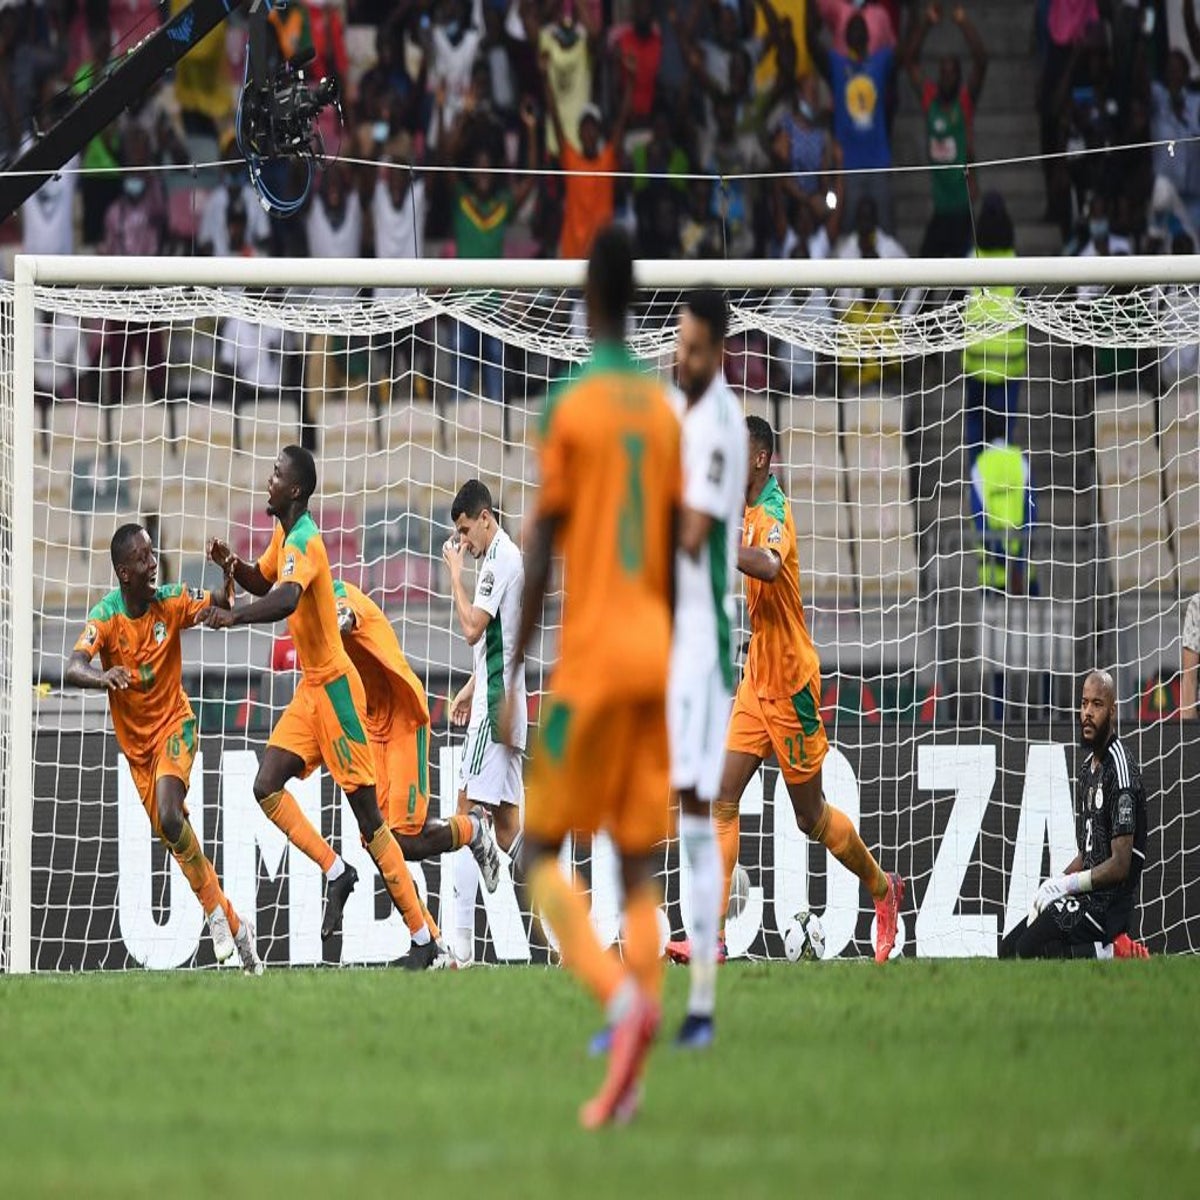 Late penalty seals Burkina Faso win over Mauritania